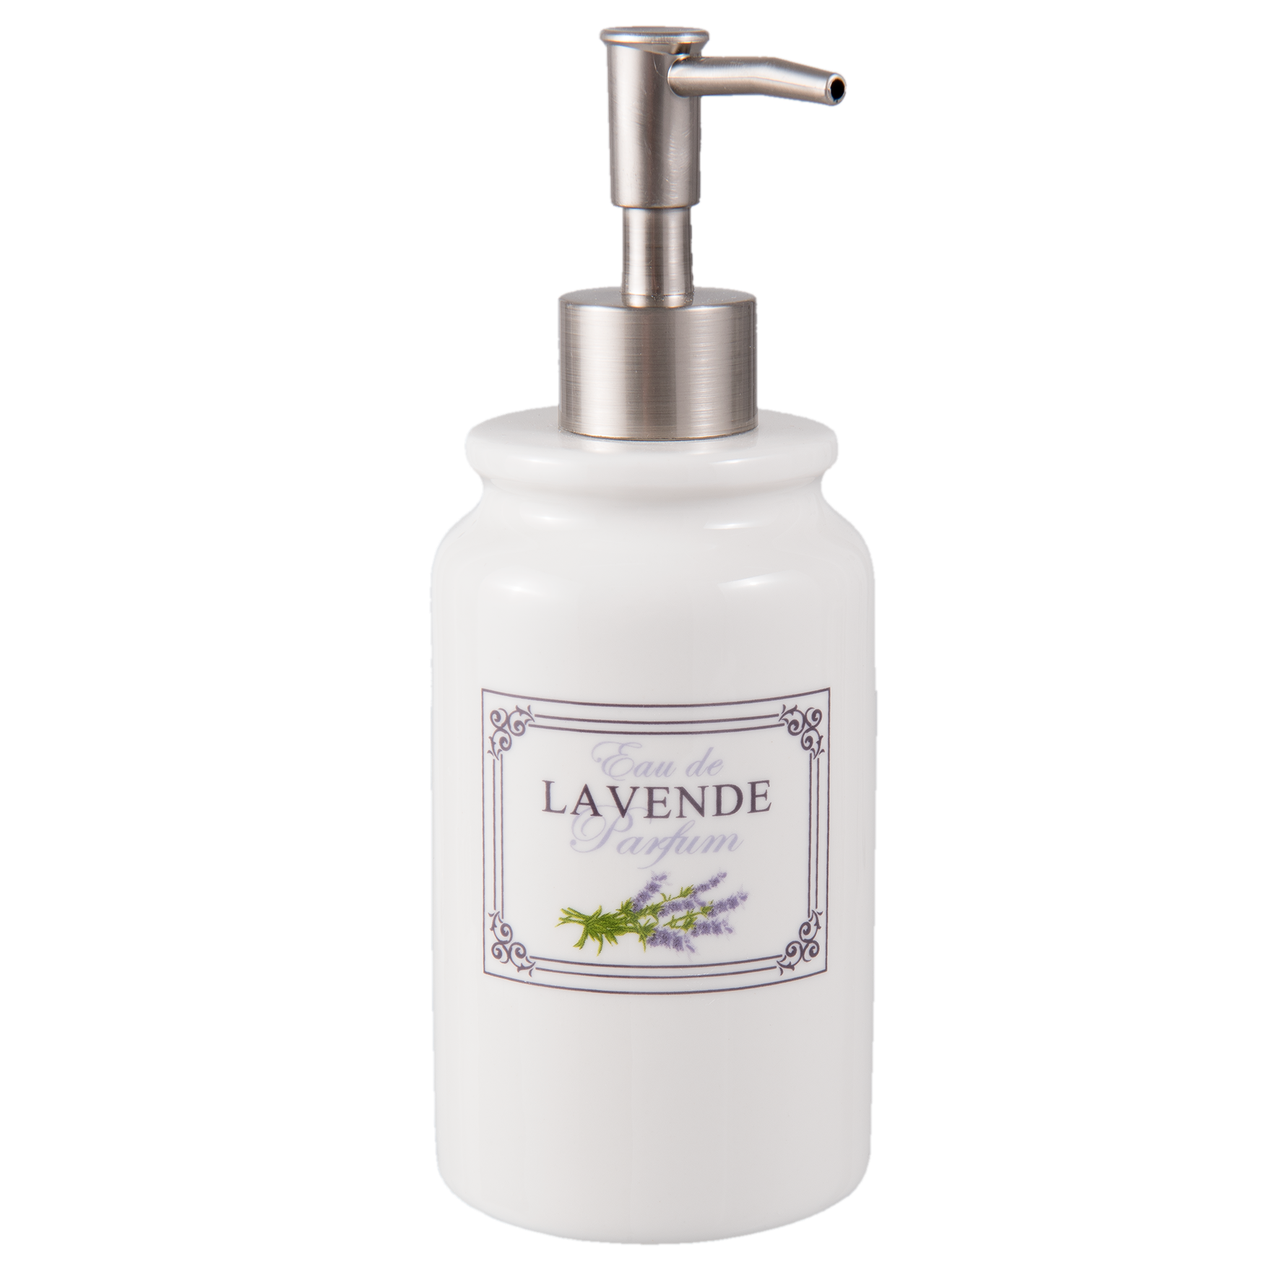 Lavende - elegant soap dispenser